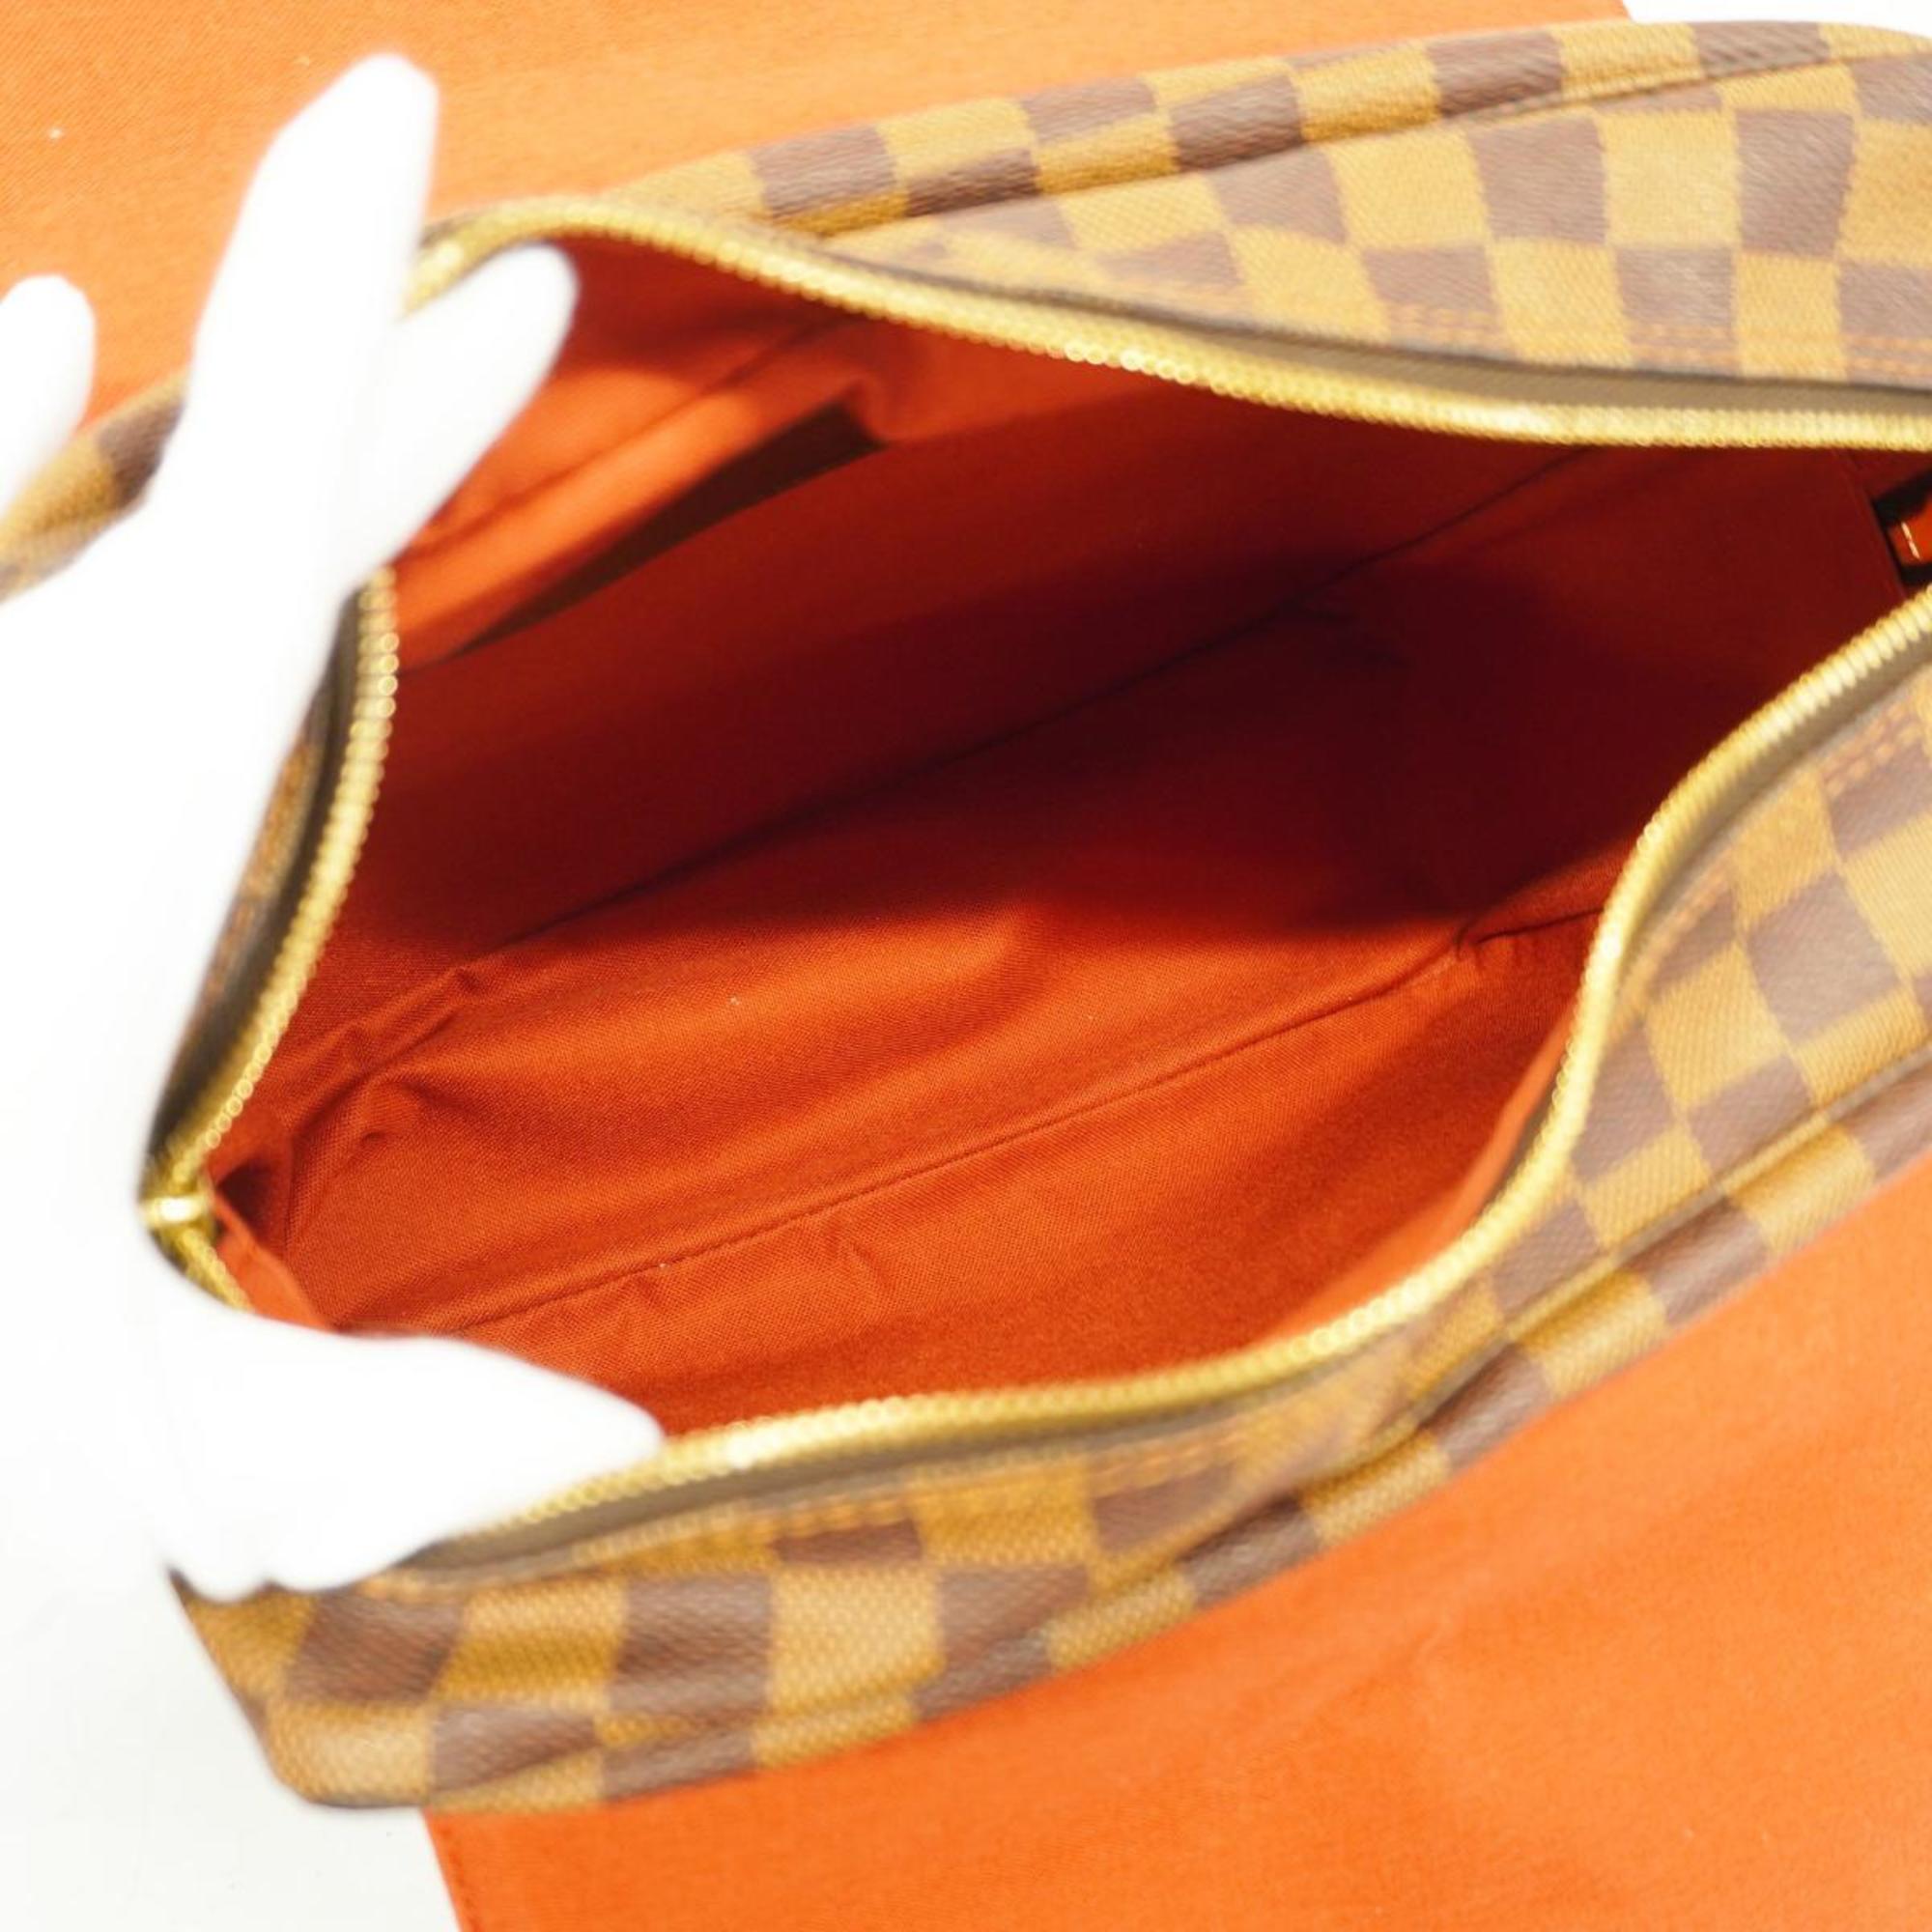 Louis Vuitton Shoulder Bag Damier Naviglio N45255 Ebene Men's